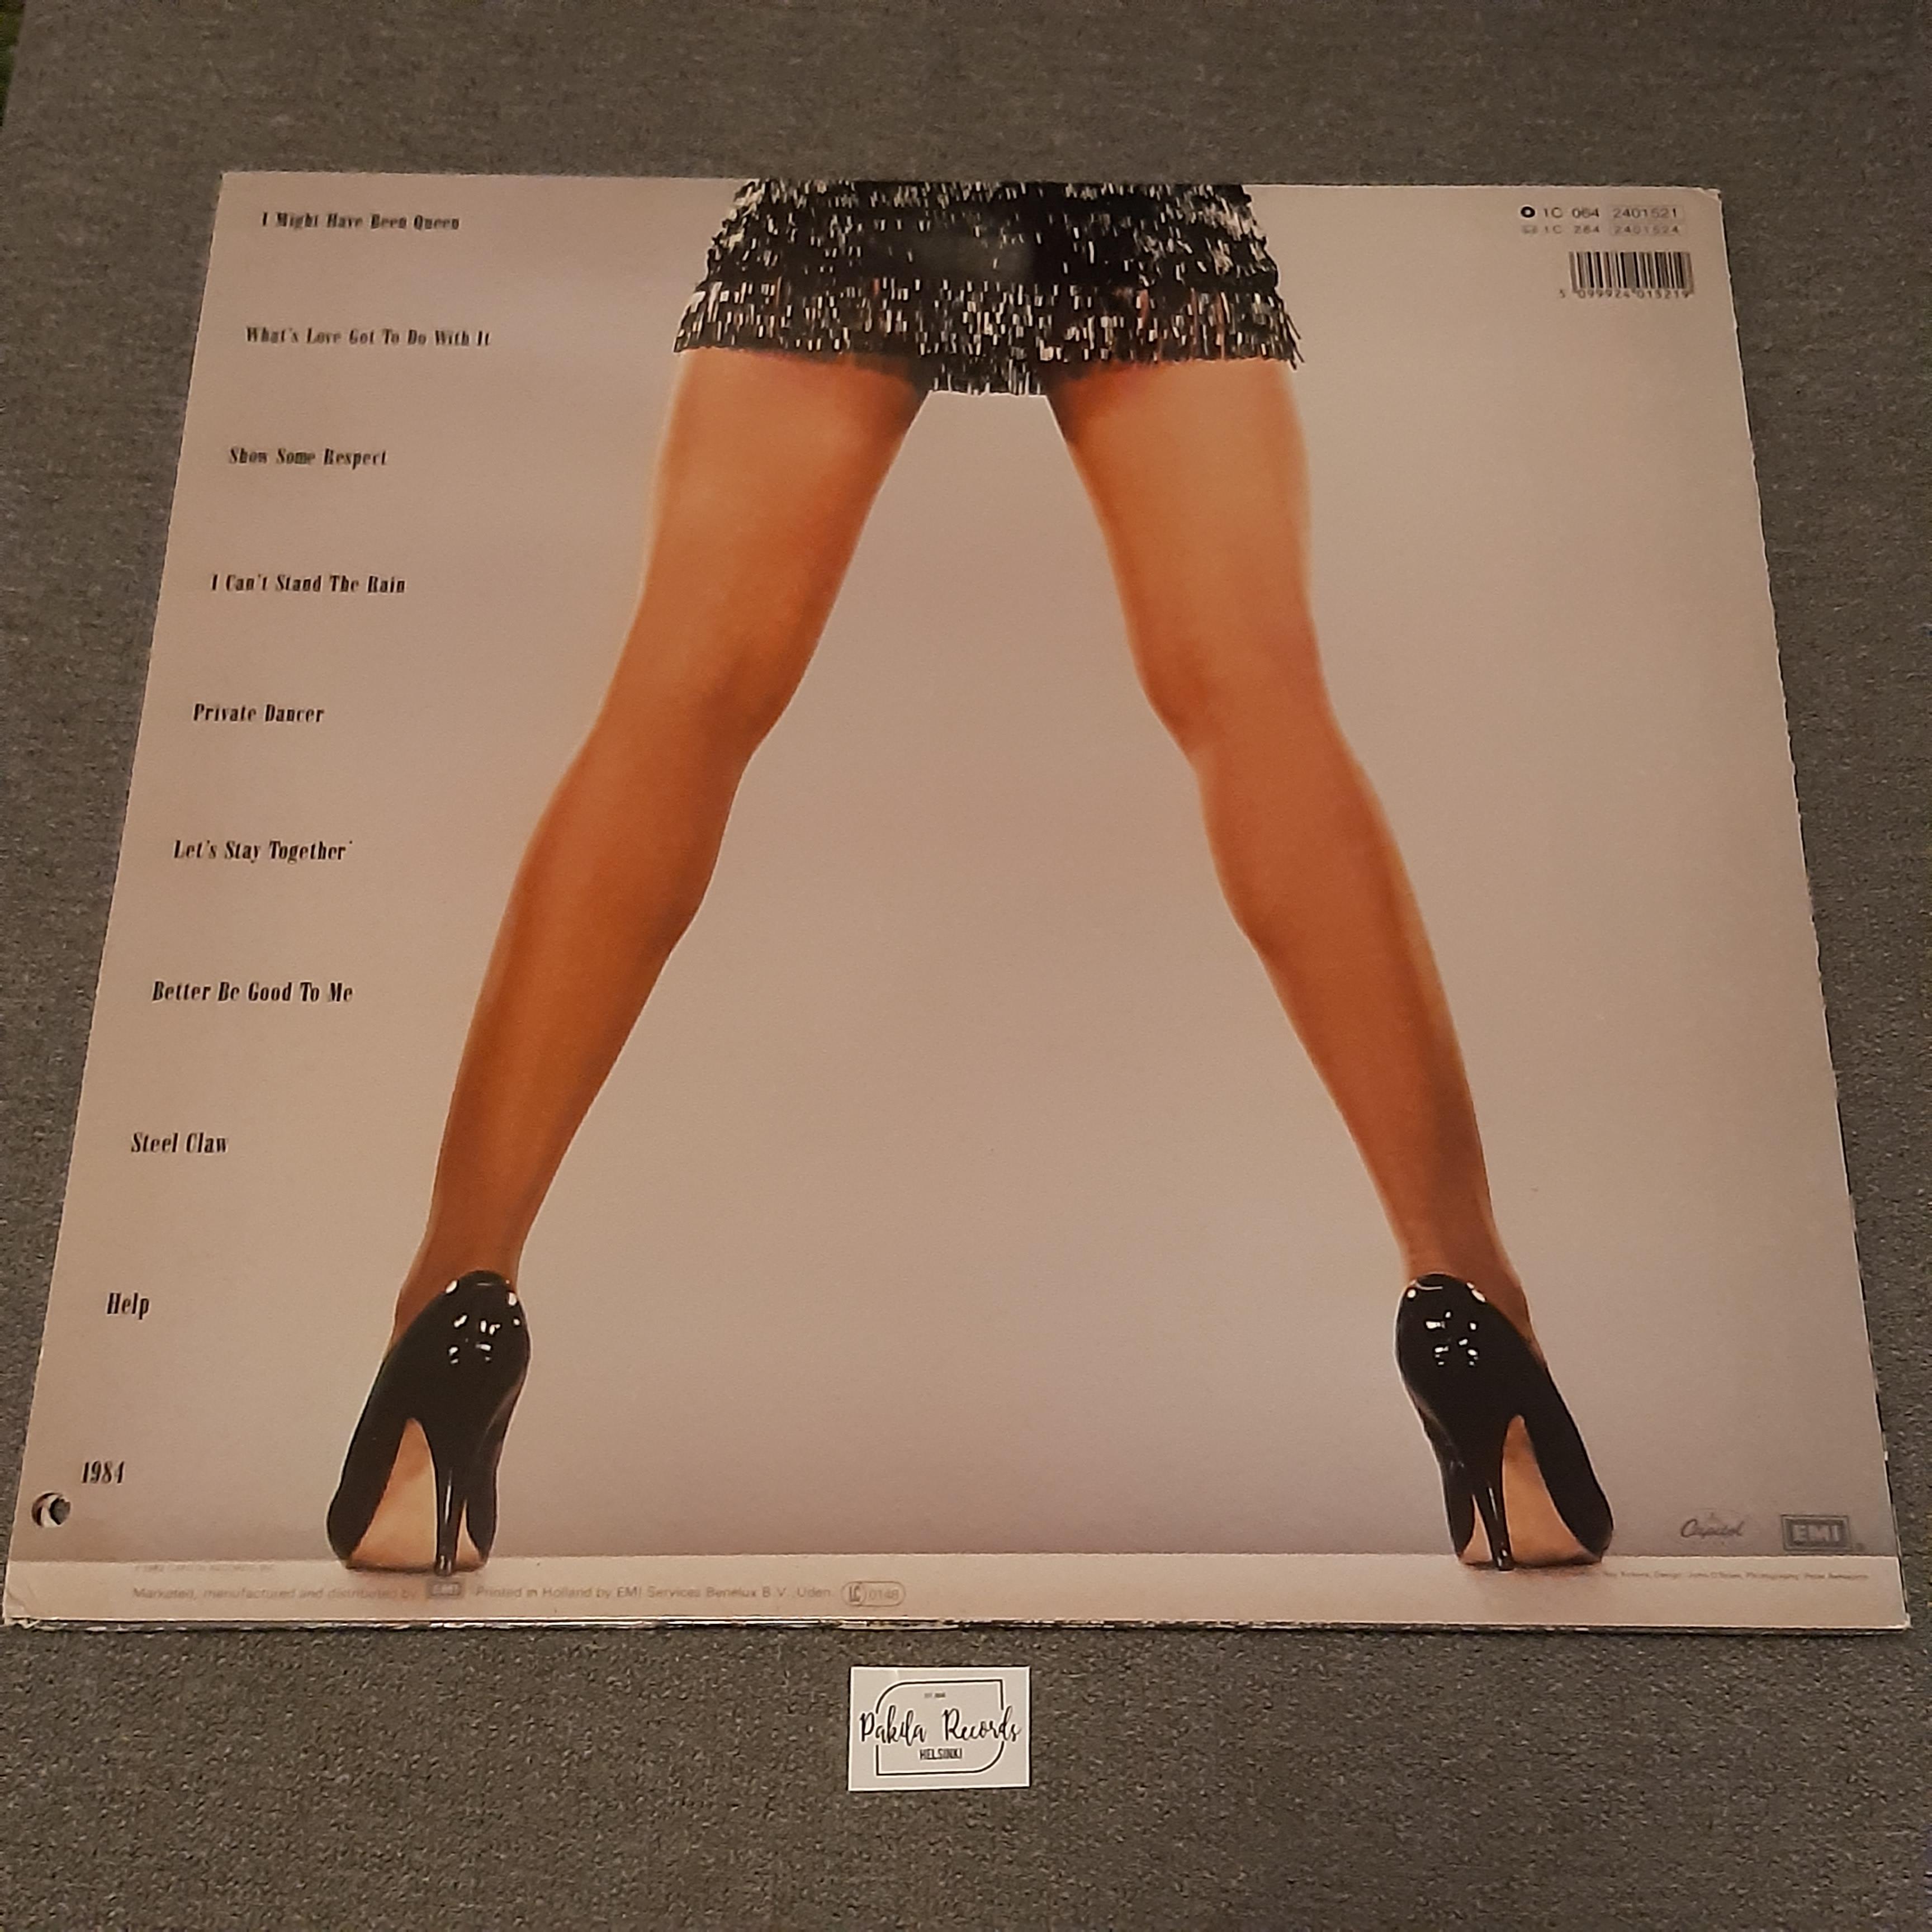 Tina Turner - Private Dancer - LP (käytetty)